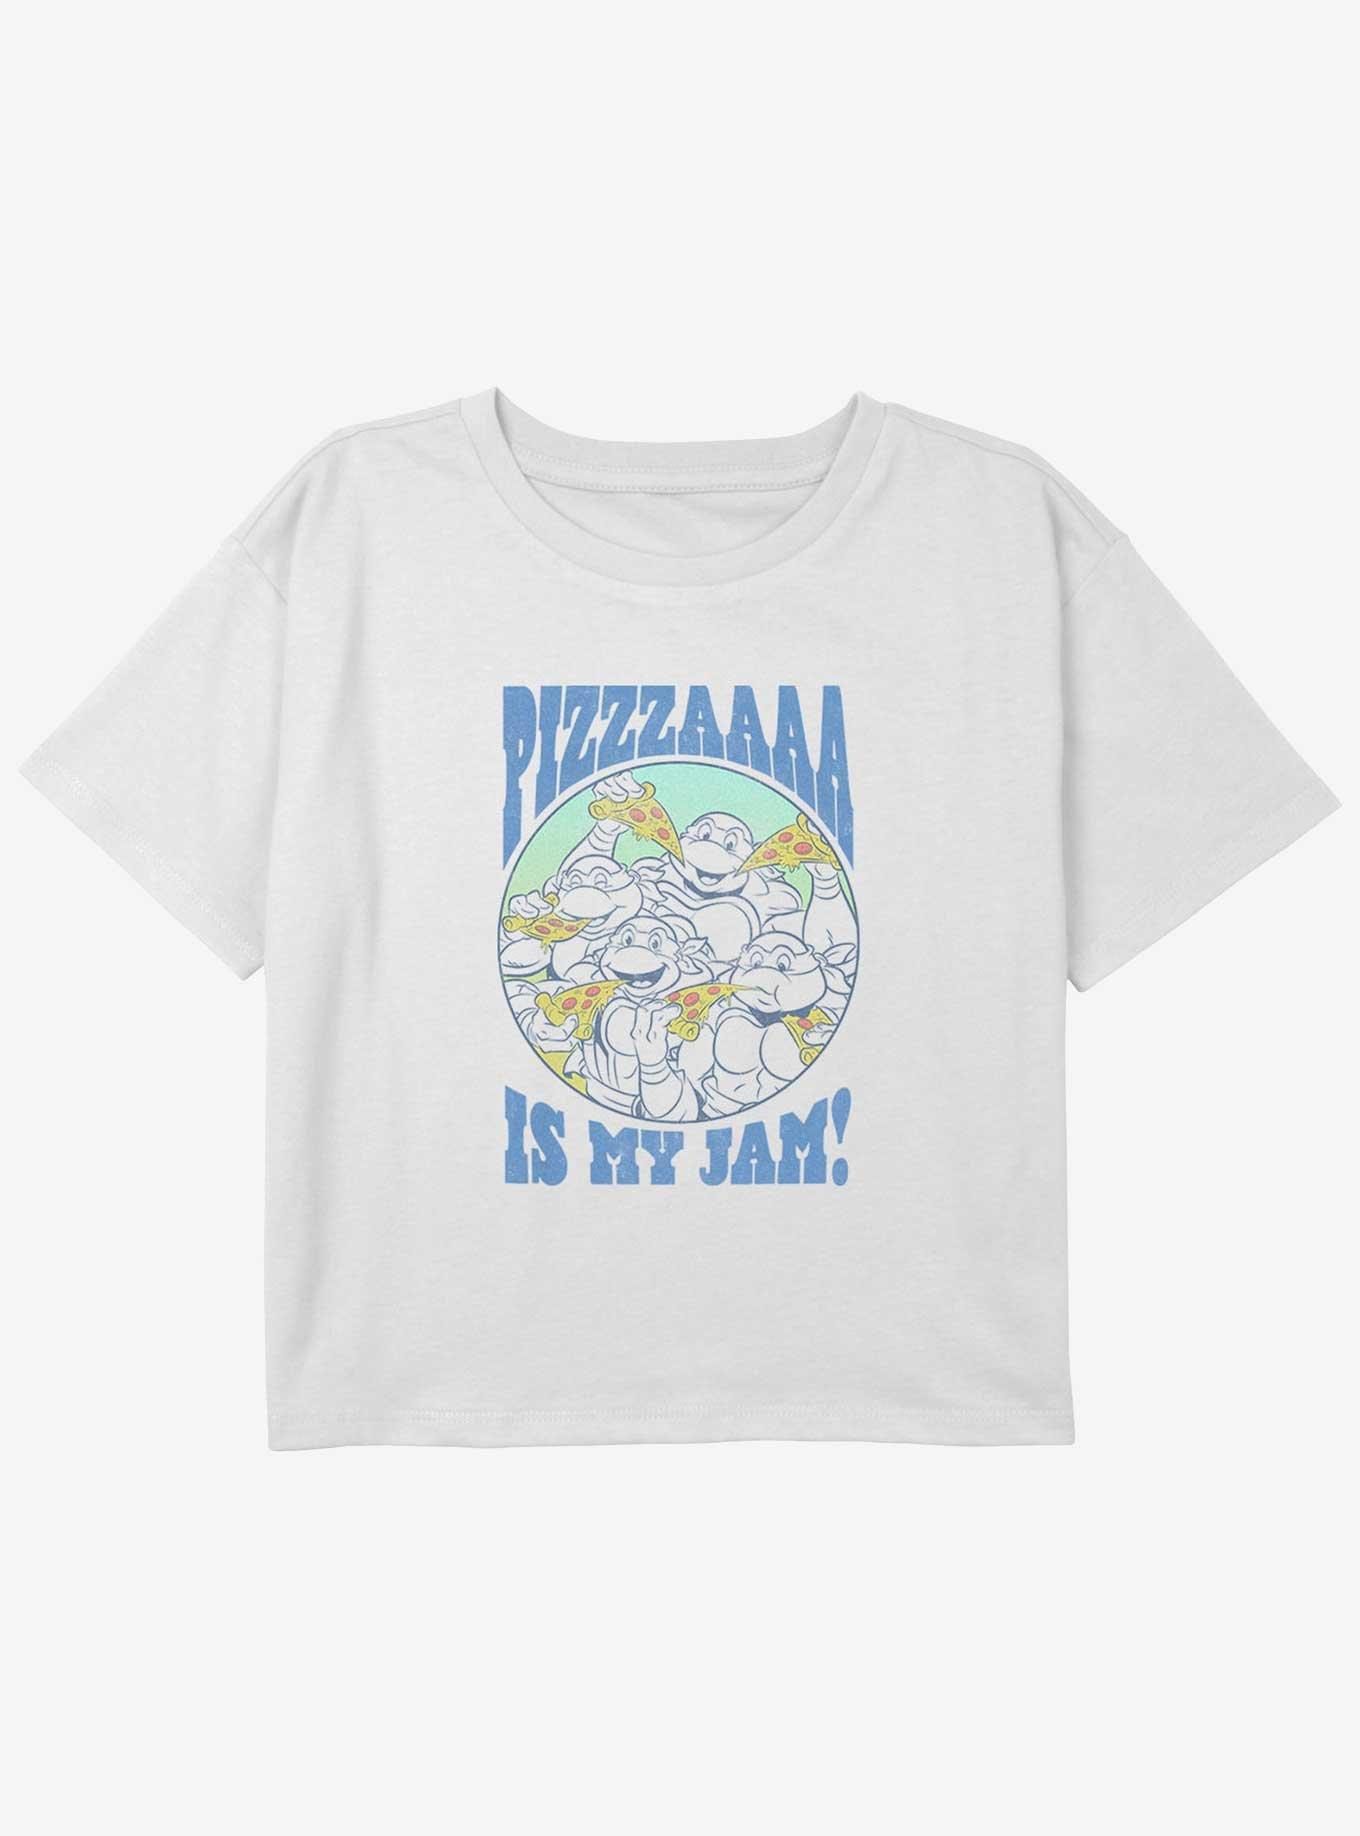 Teenage Mutant Ninja Turtles Pizza Is My Jam Girls Youth Crop T-Shirt, WHITE, hi-res